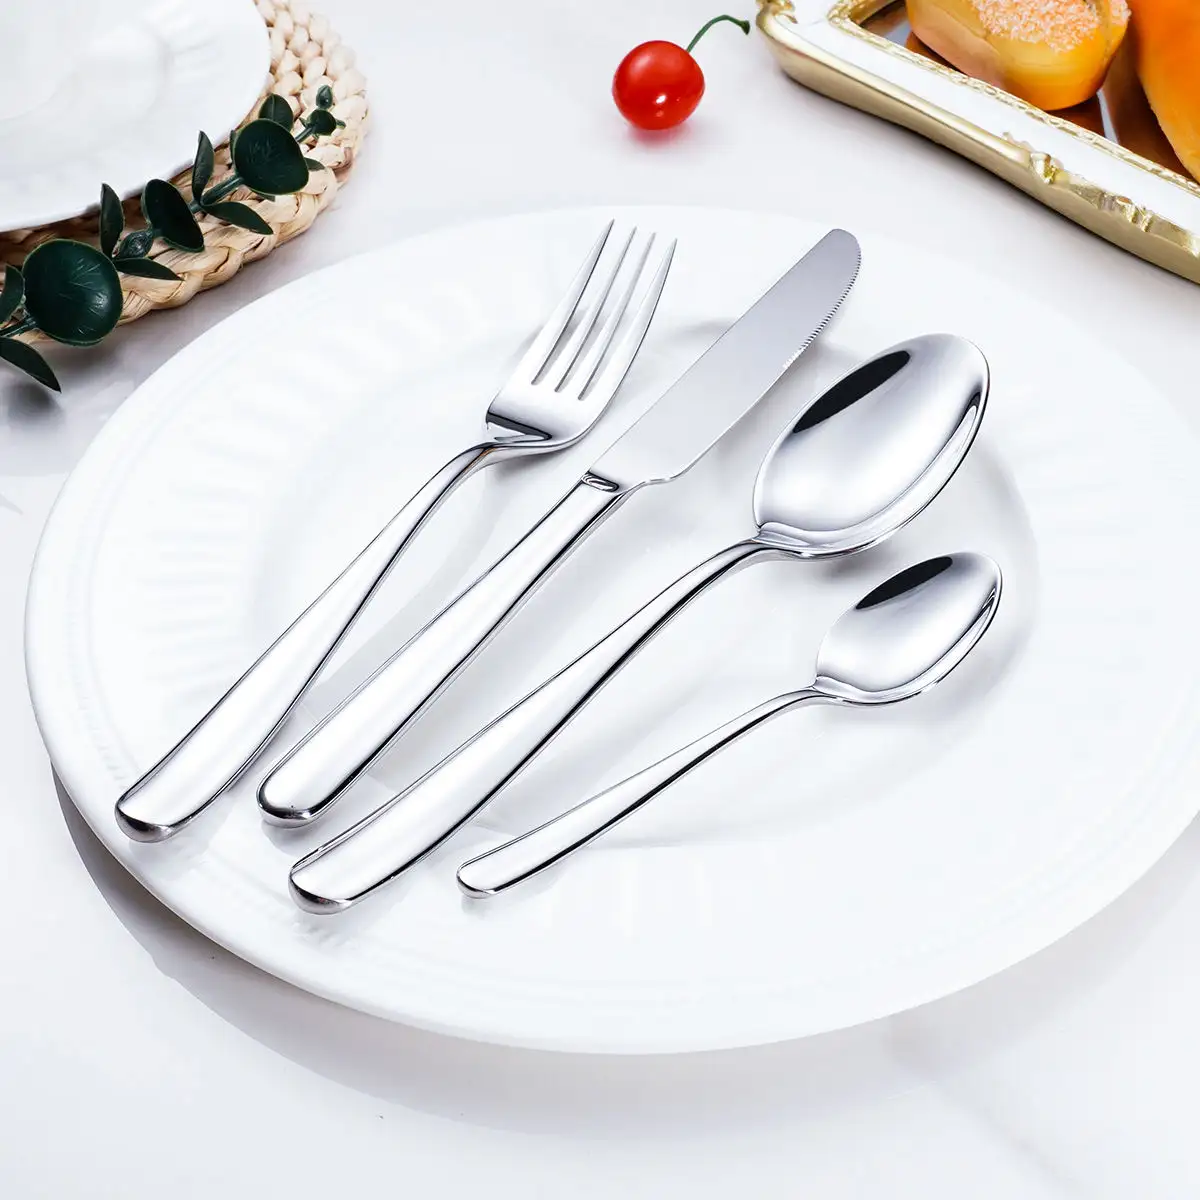 Europe Hot Sell Restaurant Silverware Wedding Flatware Stainless Steel Dinner Knife And Fork Spoon Serving Cutlery Set